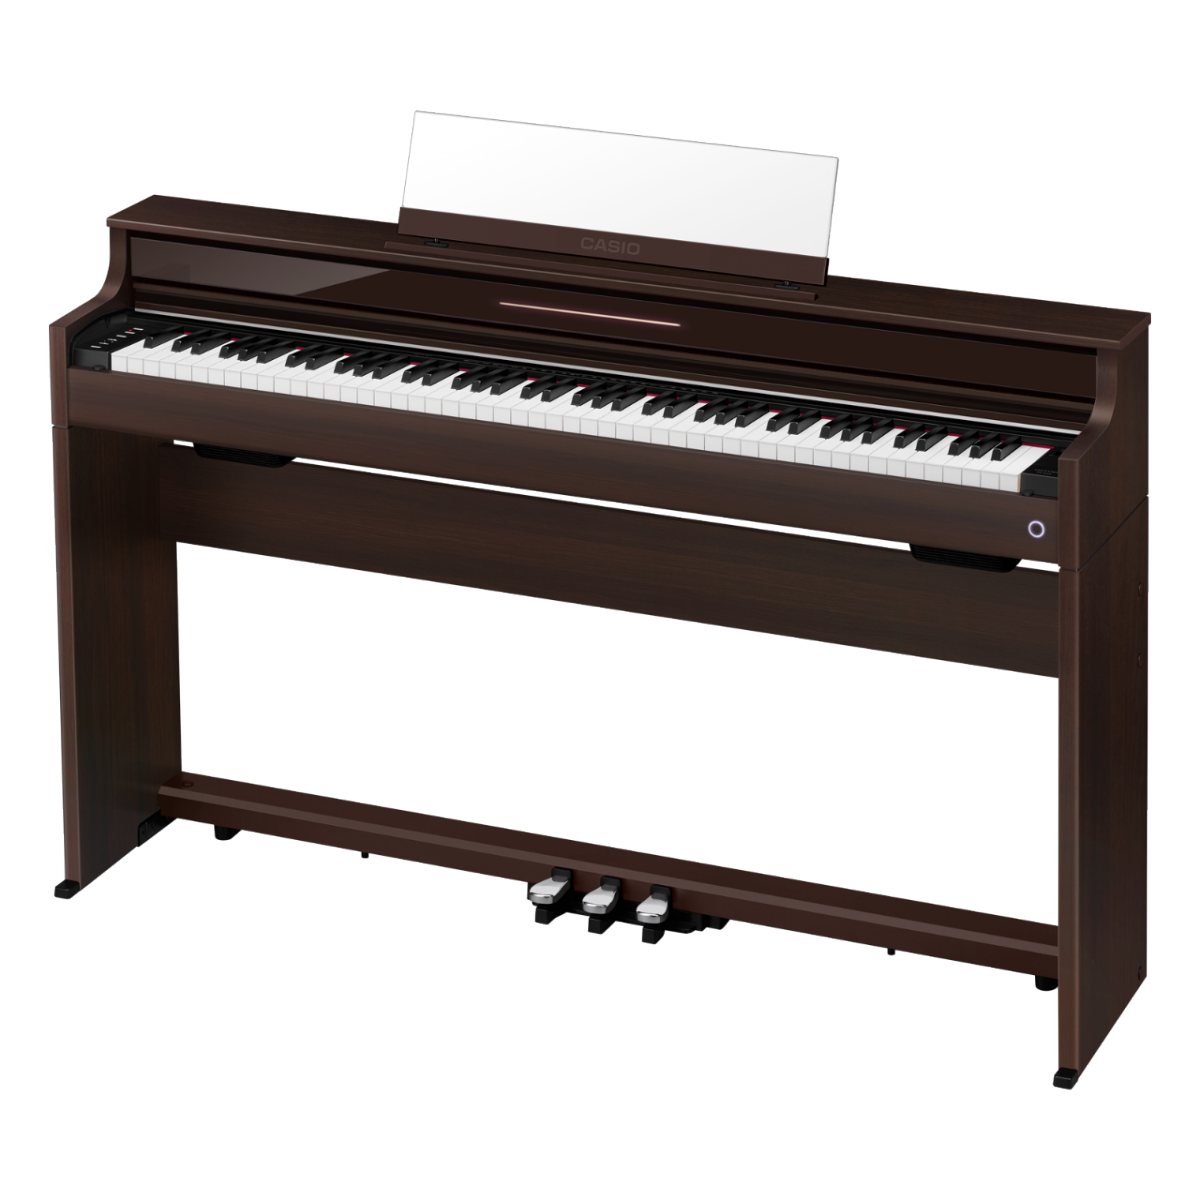 Casio AP-S450 Upright Wooden Keys Digital Piano, Brown